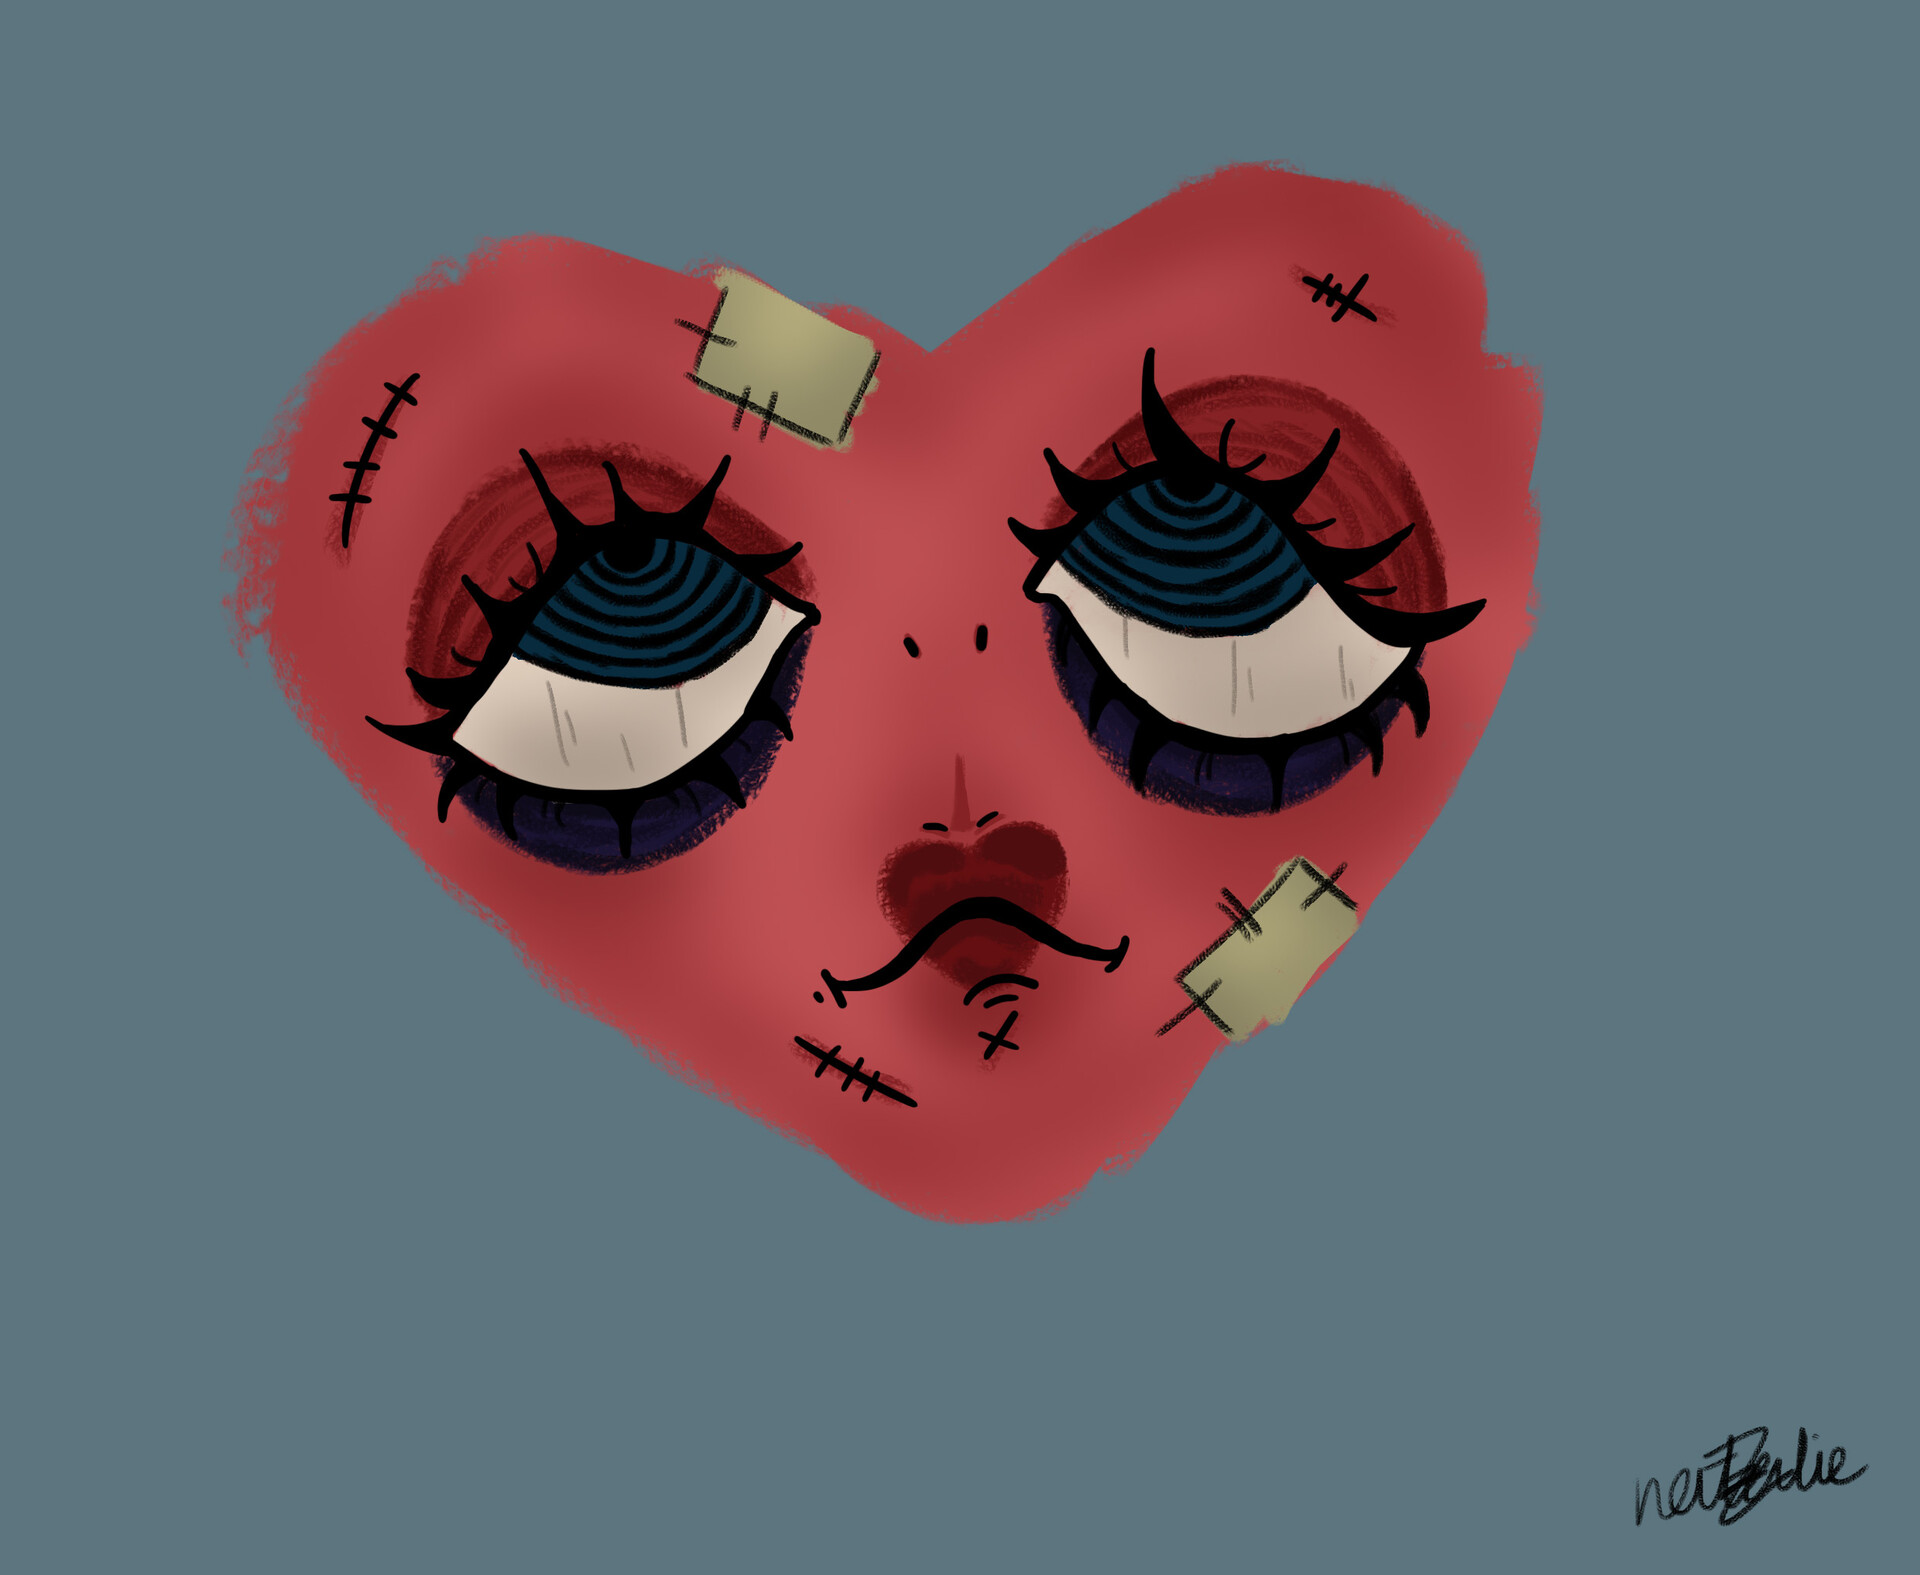 ArtStation - Heart eyes